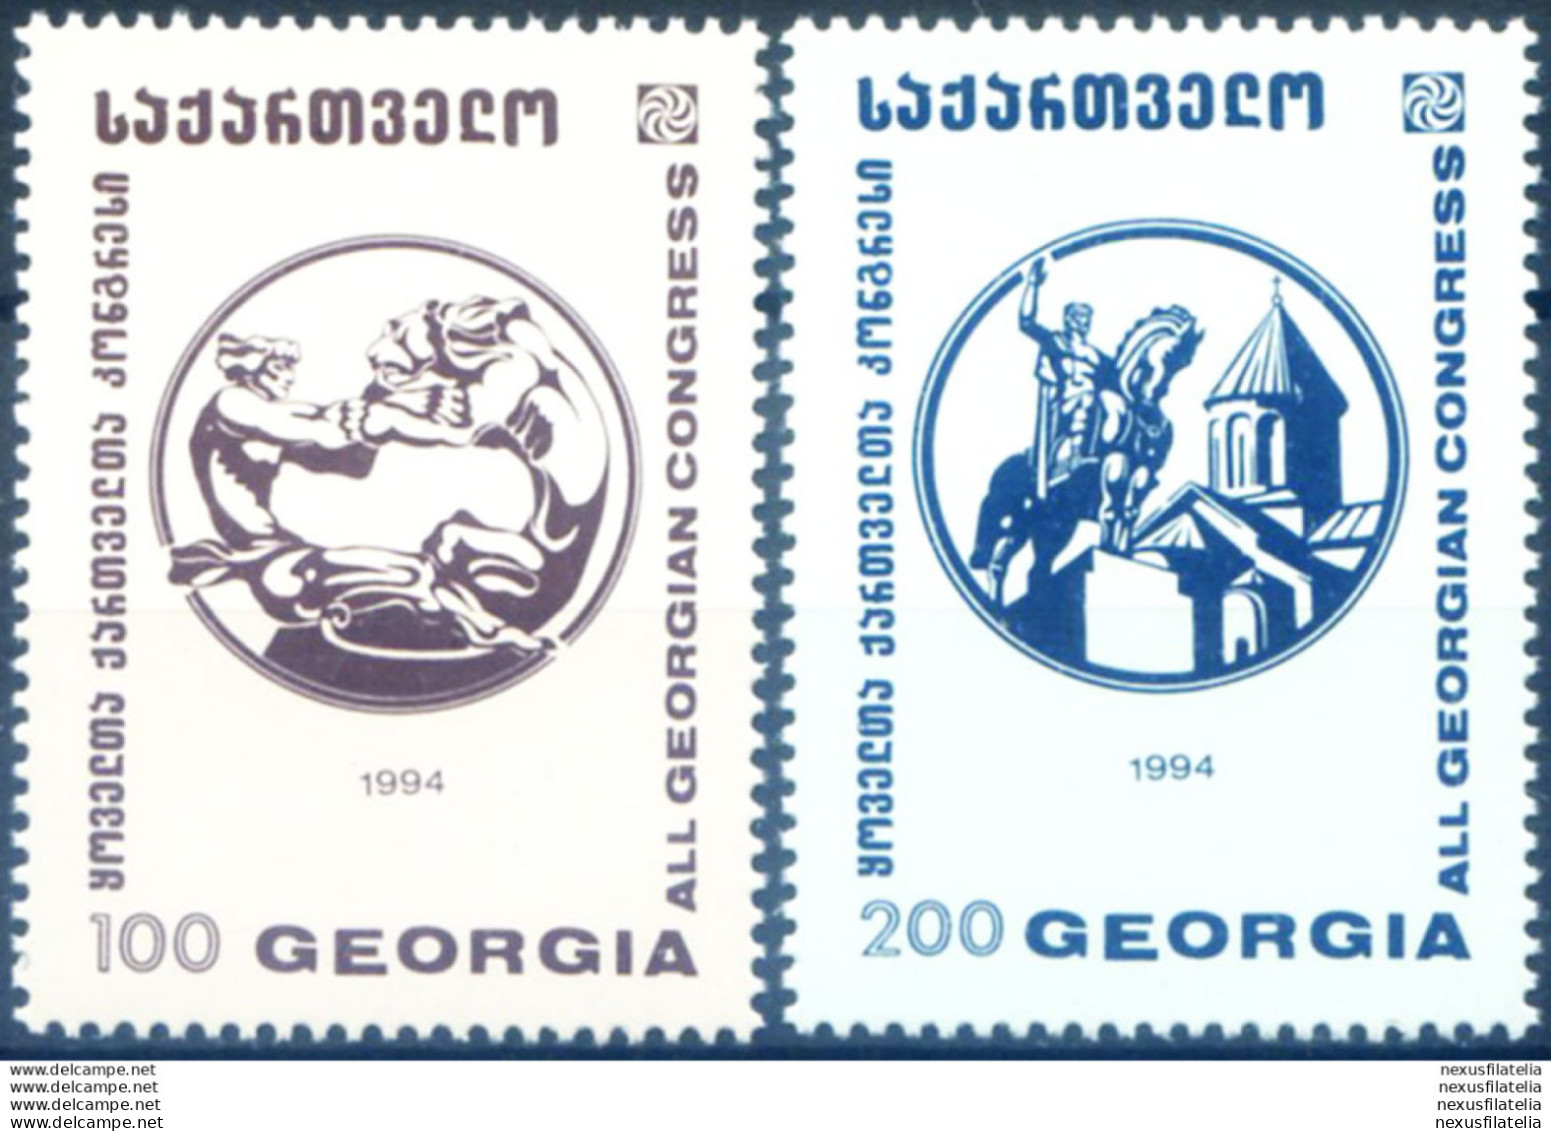 Congresso pangeorgiano 1994.